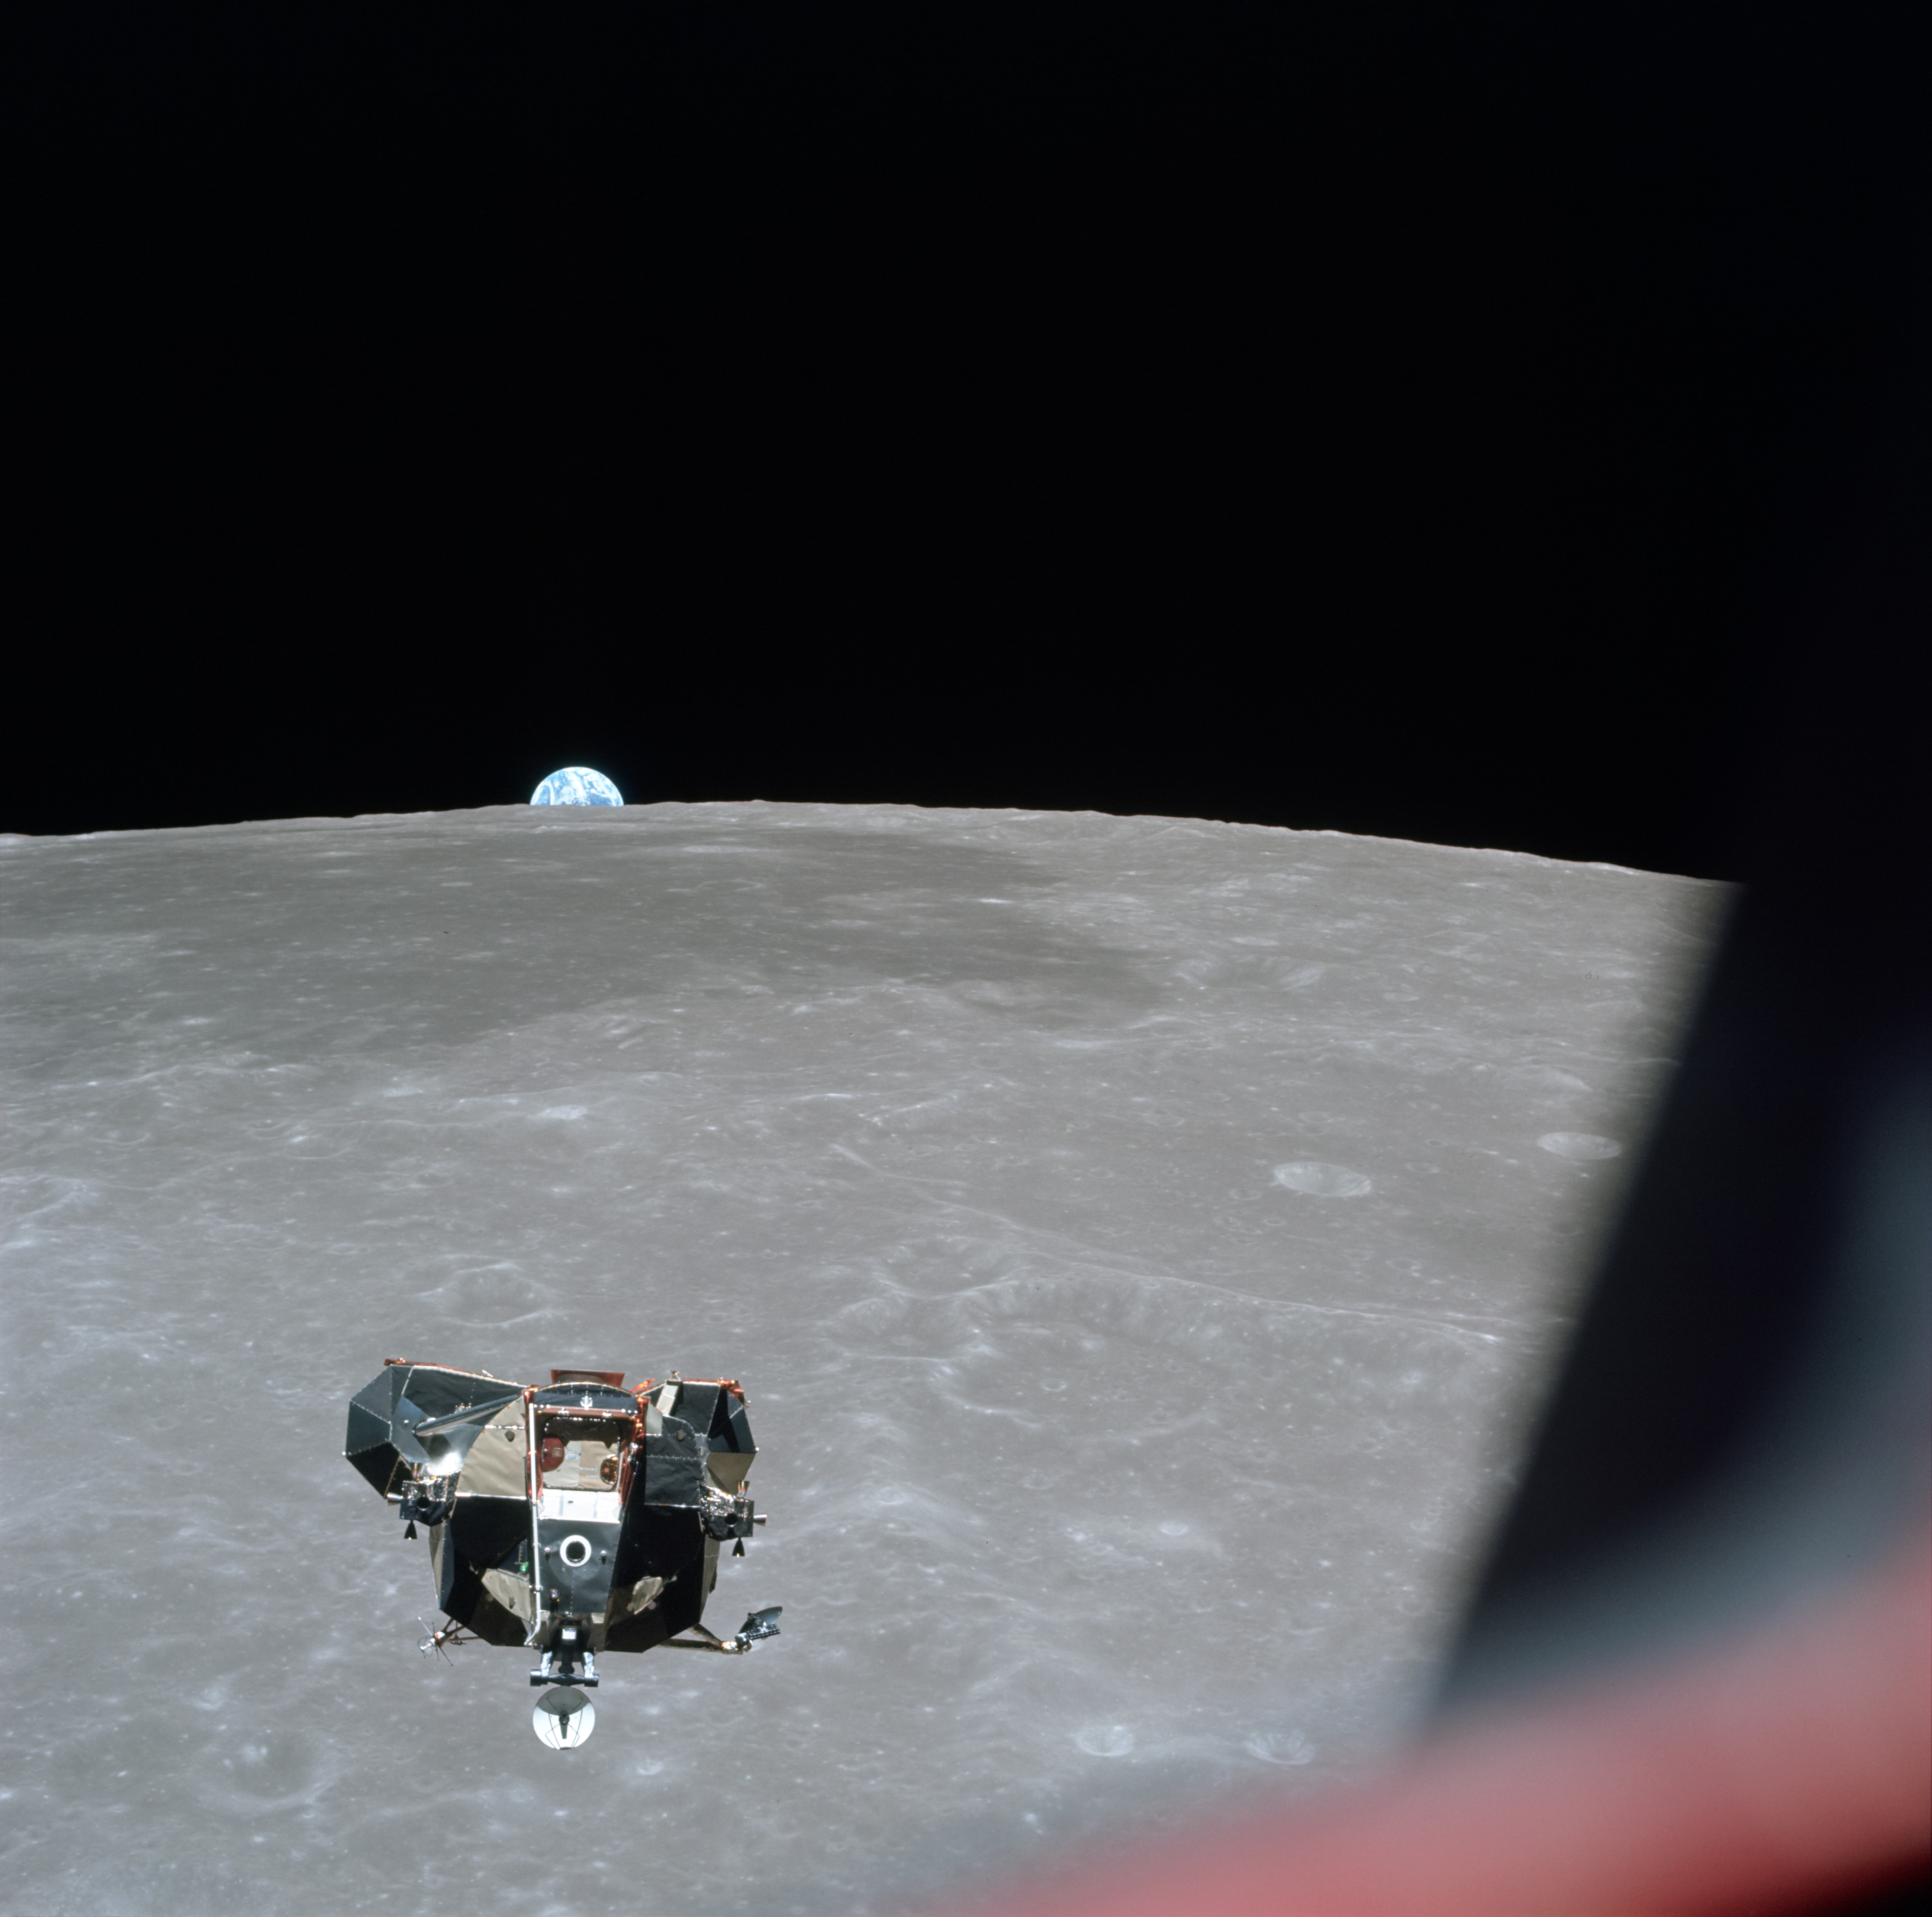 Корабль на поверхности луны. Апполо 11 на Луне. Лунный модуль Аполлон 11. Аполлон 11 взлет с Луны. Лунный спускаемый аппарат Аполлон 11.